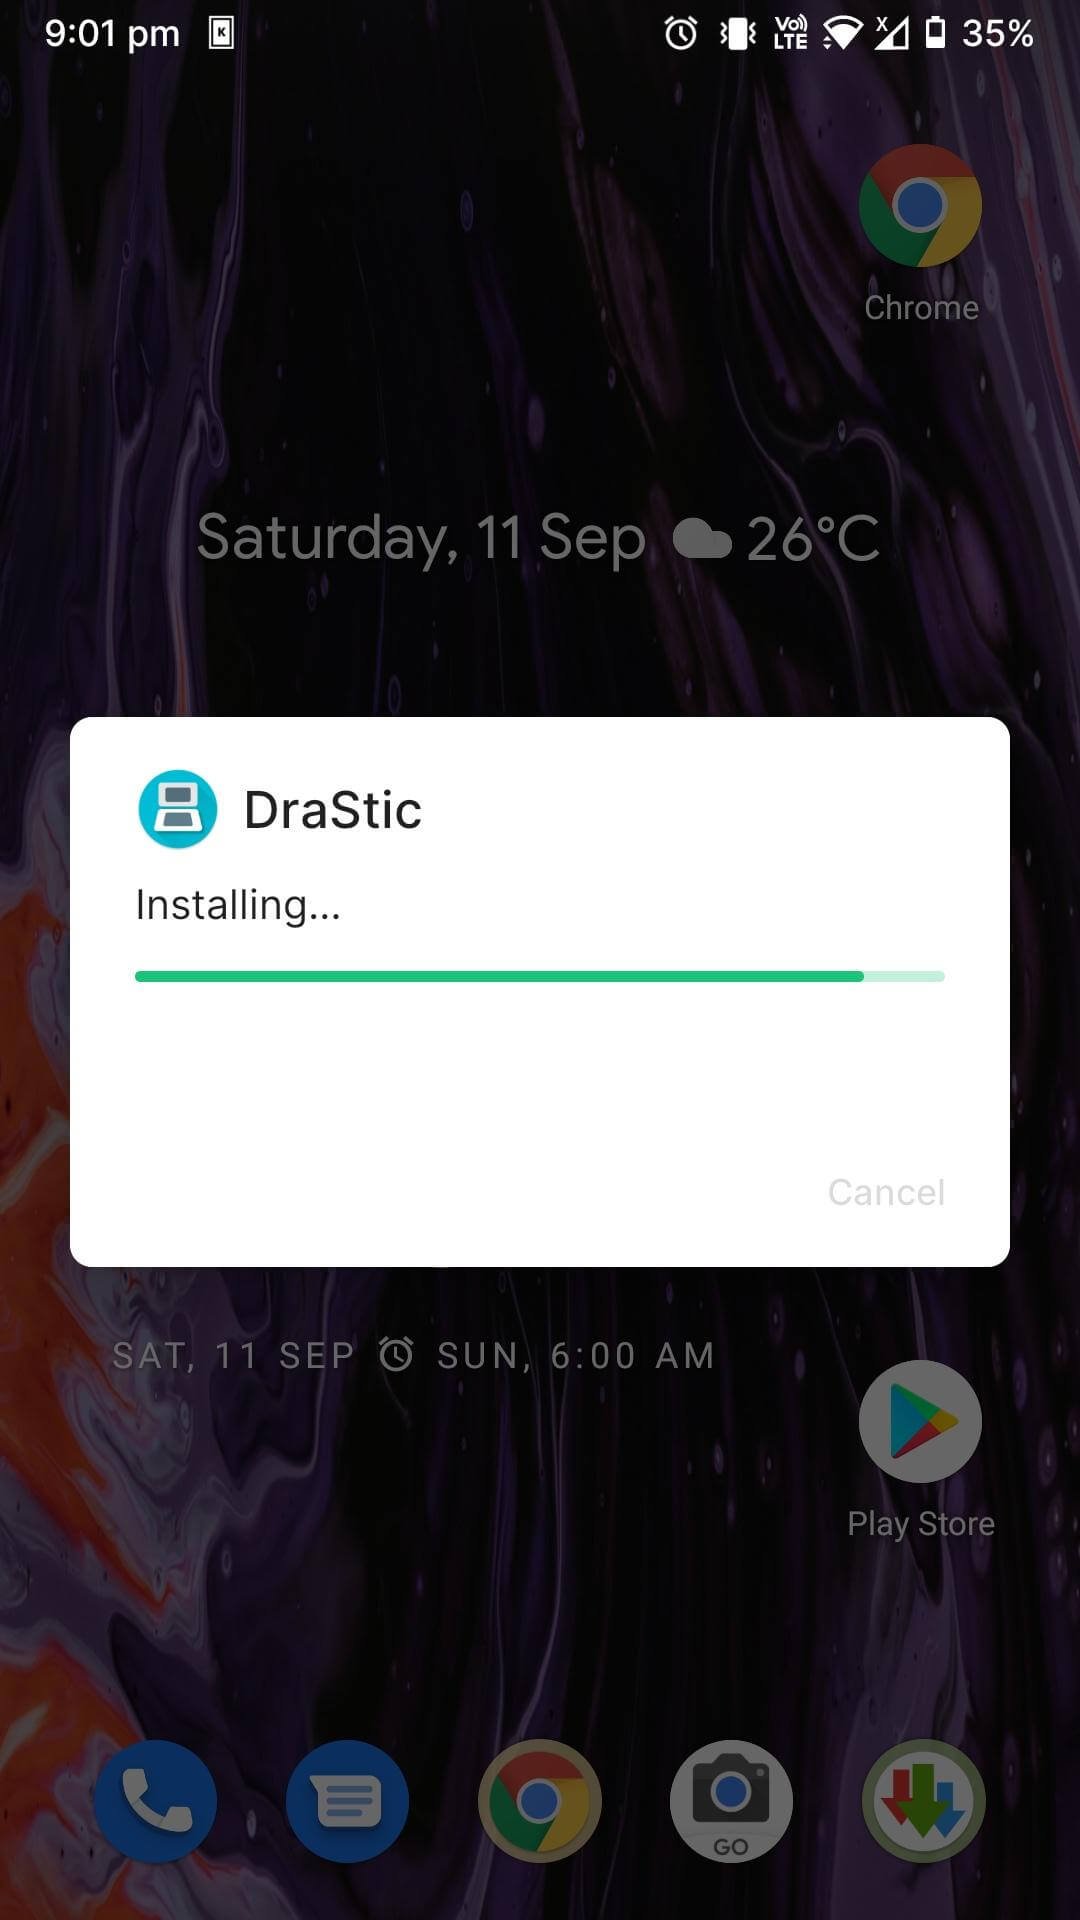 DraStic DS Emulator apk installing